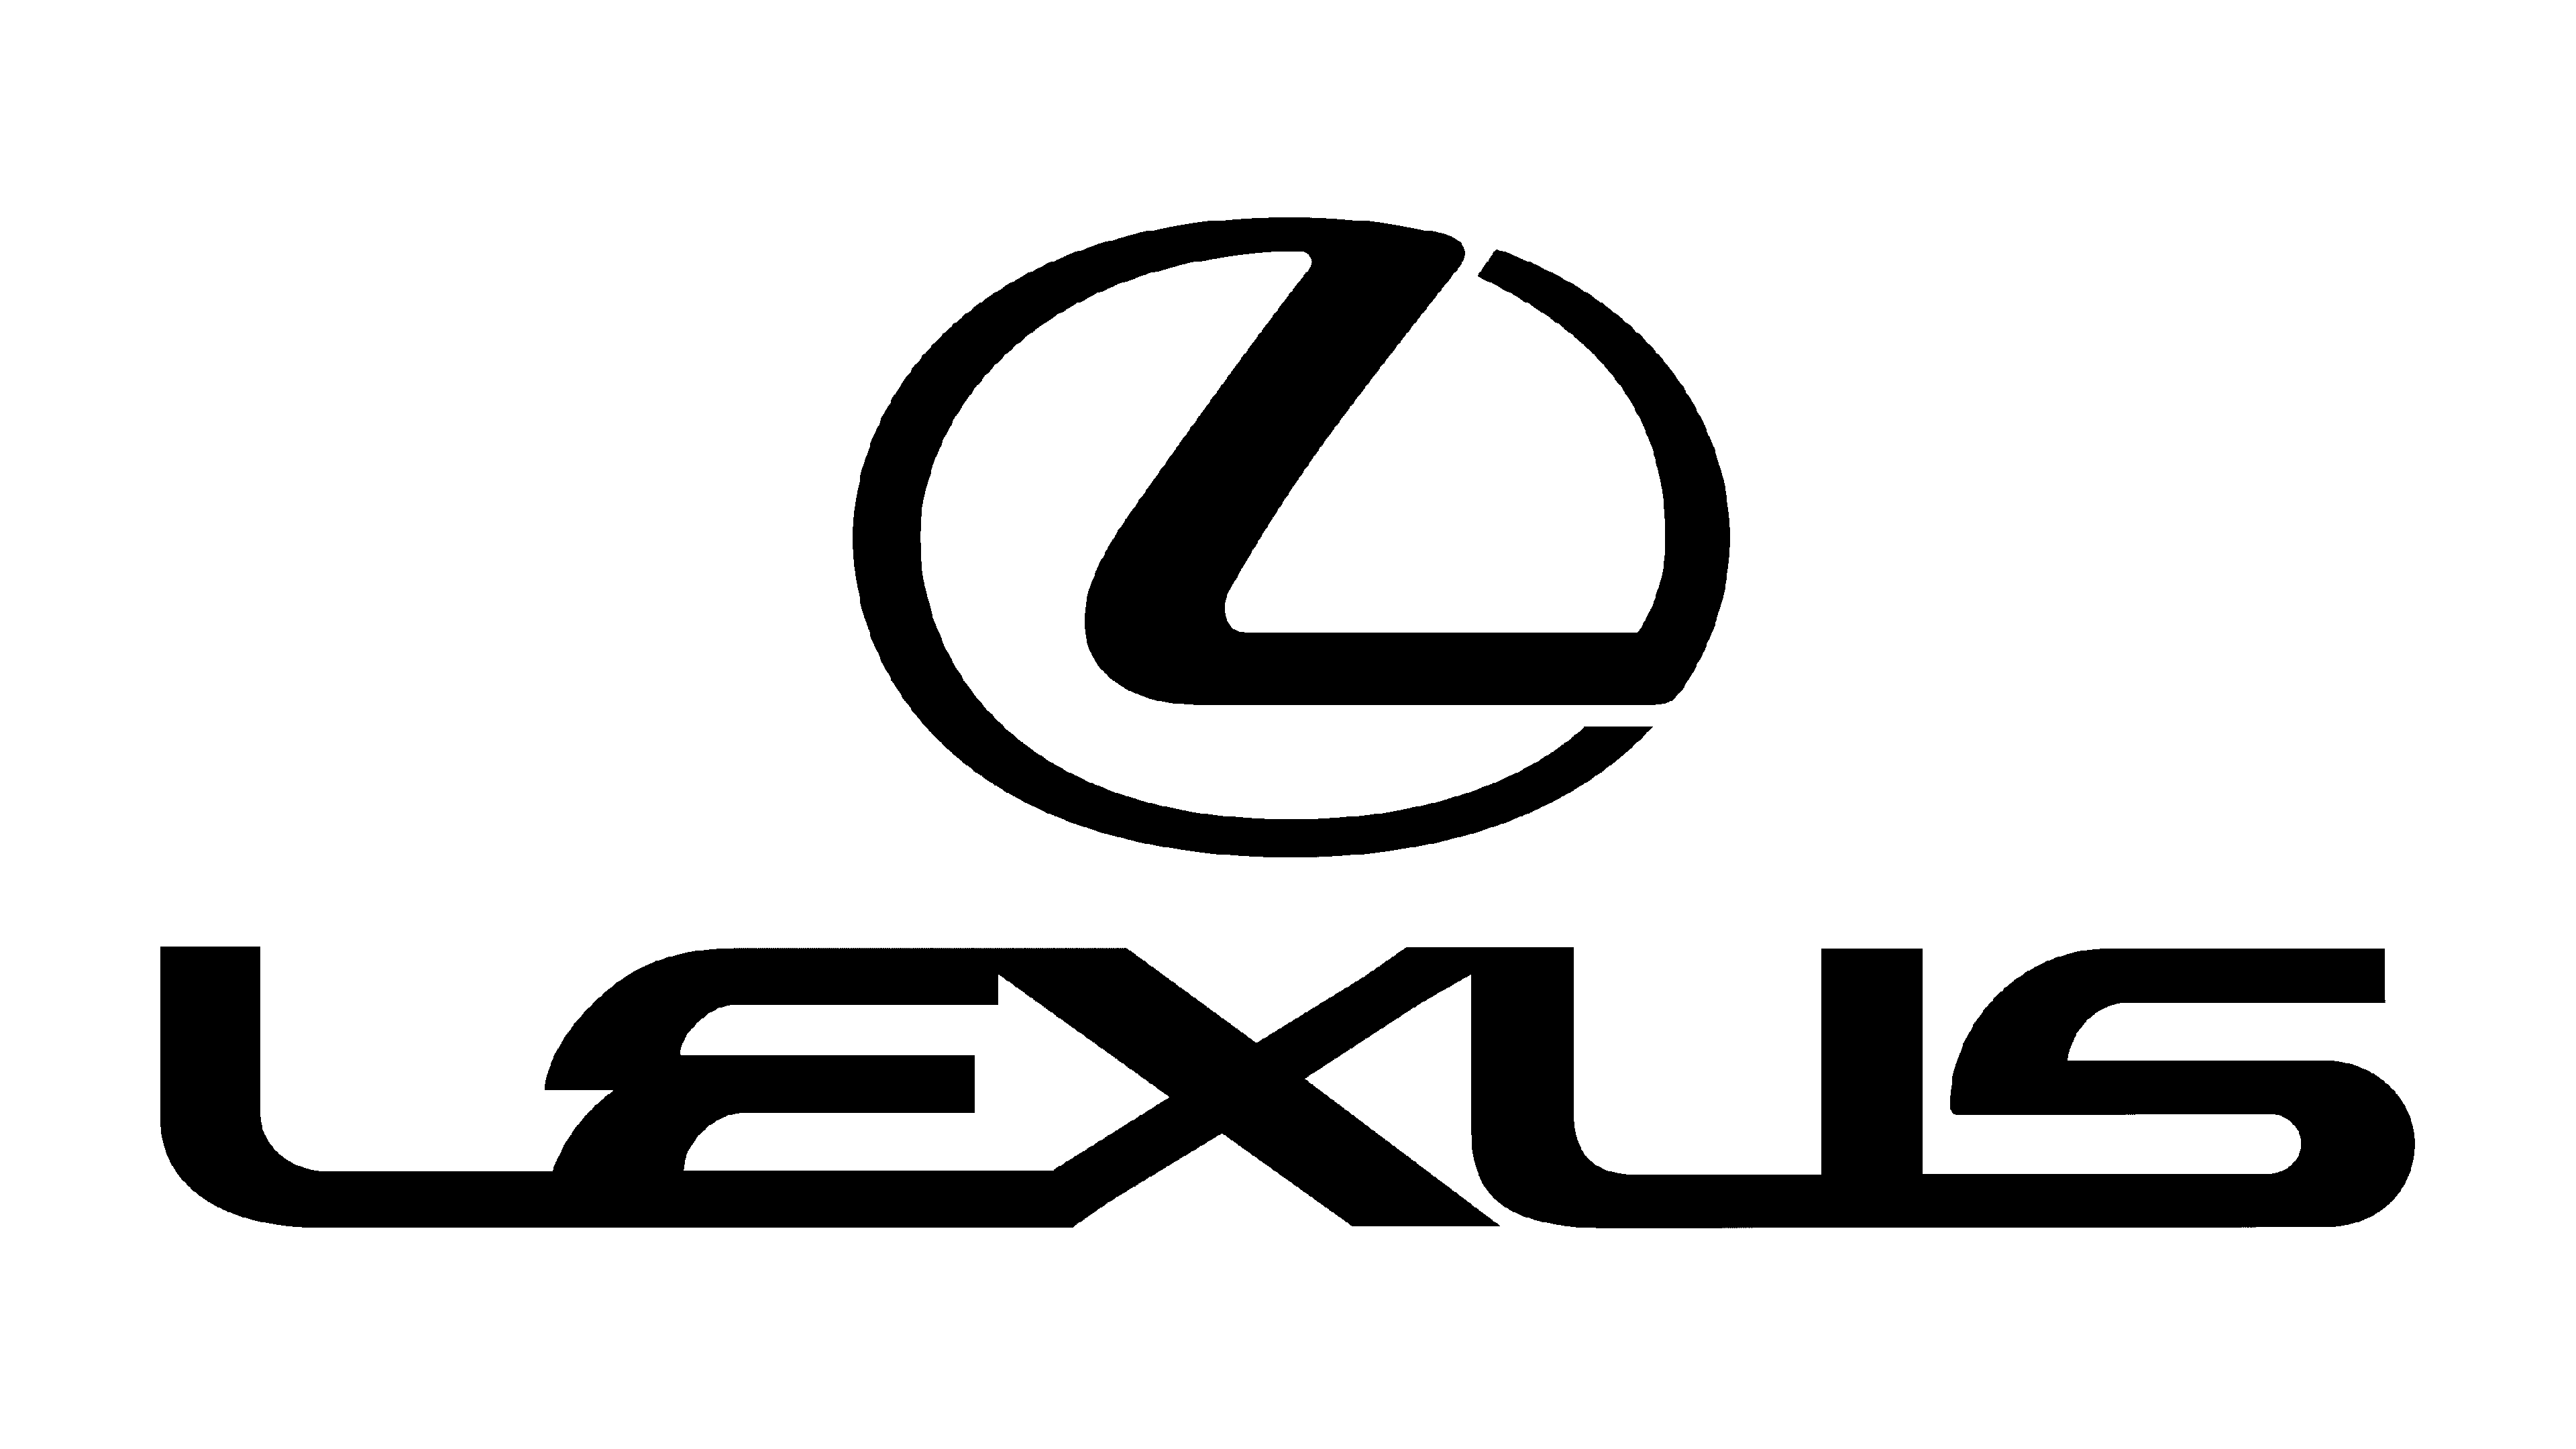 Lexus-Logo-1989